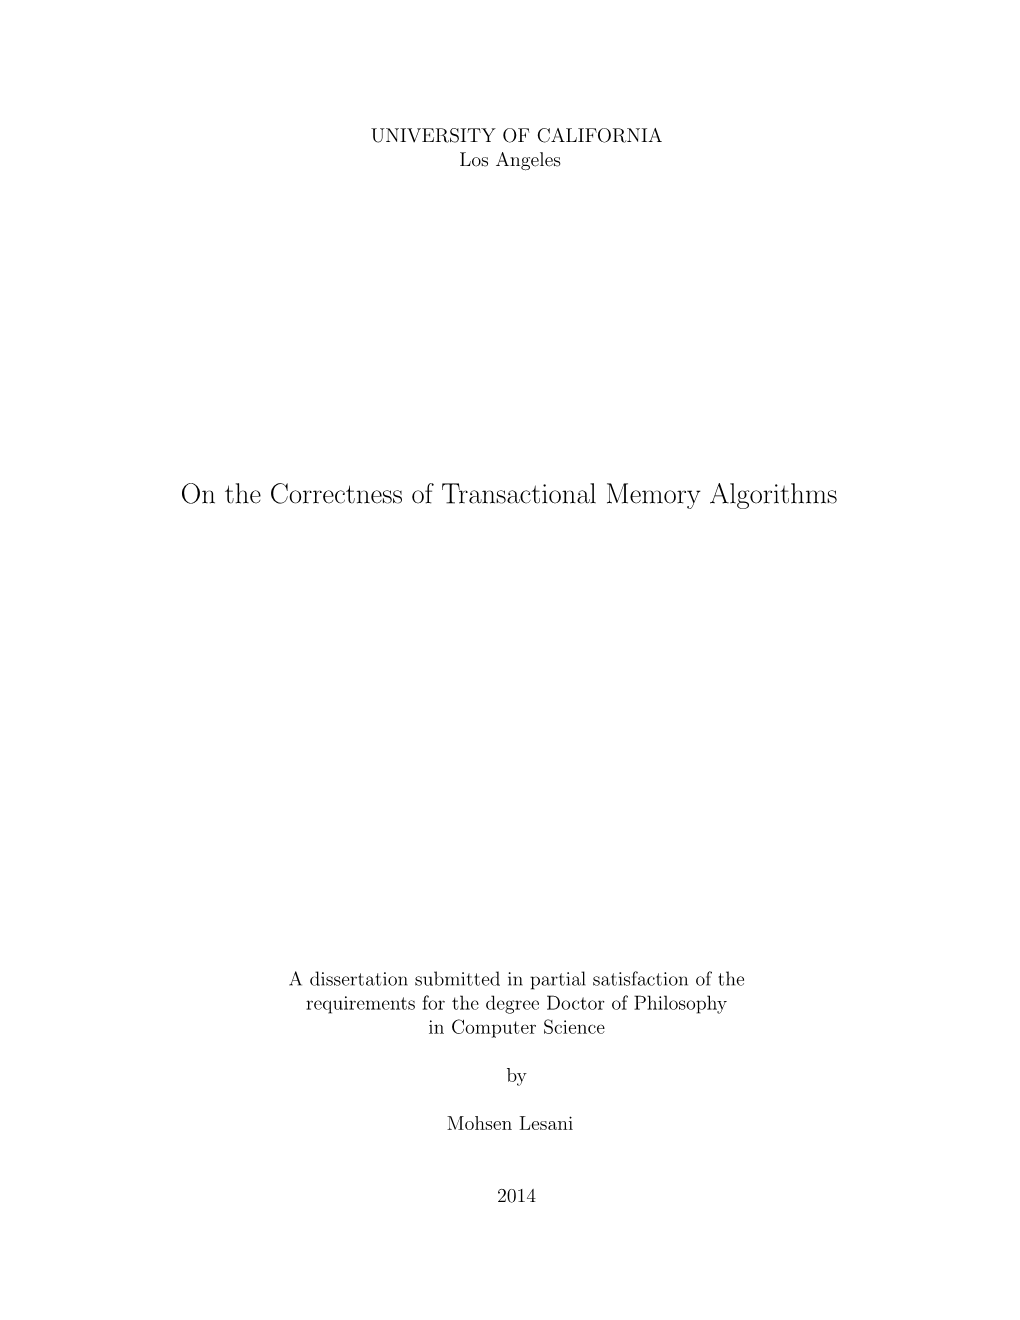 On the Correctness of Transactional Memory Algorithms